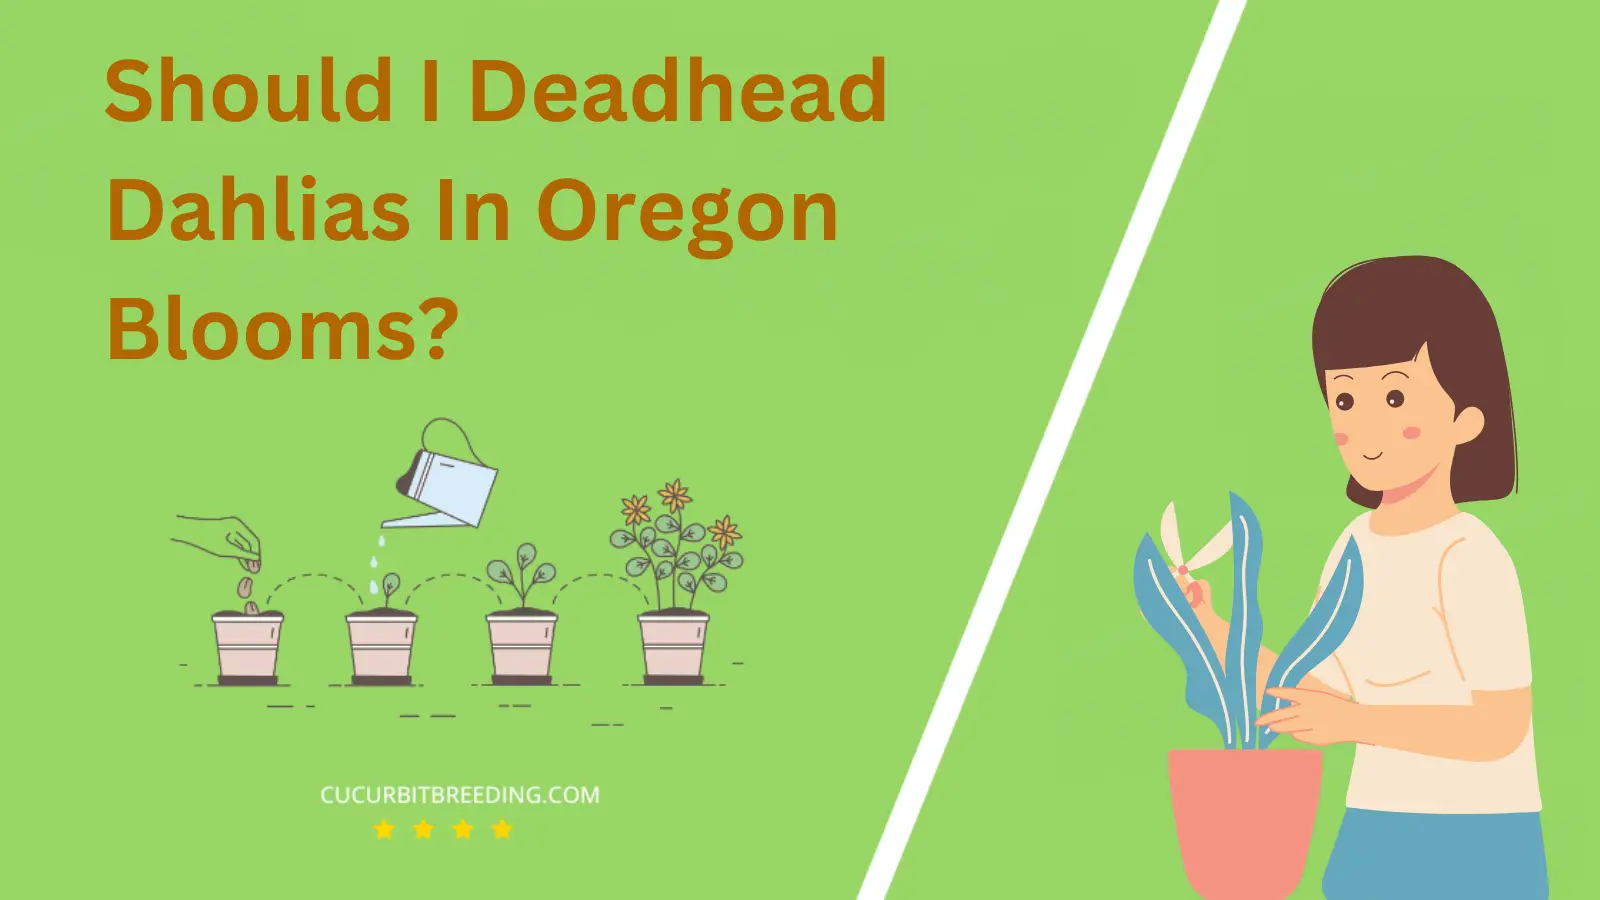 Should I Deadhead Dahlias In Oregon Blooms?